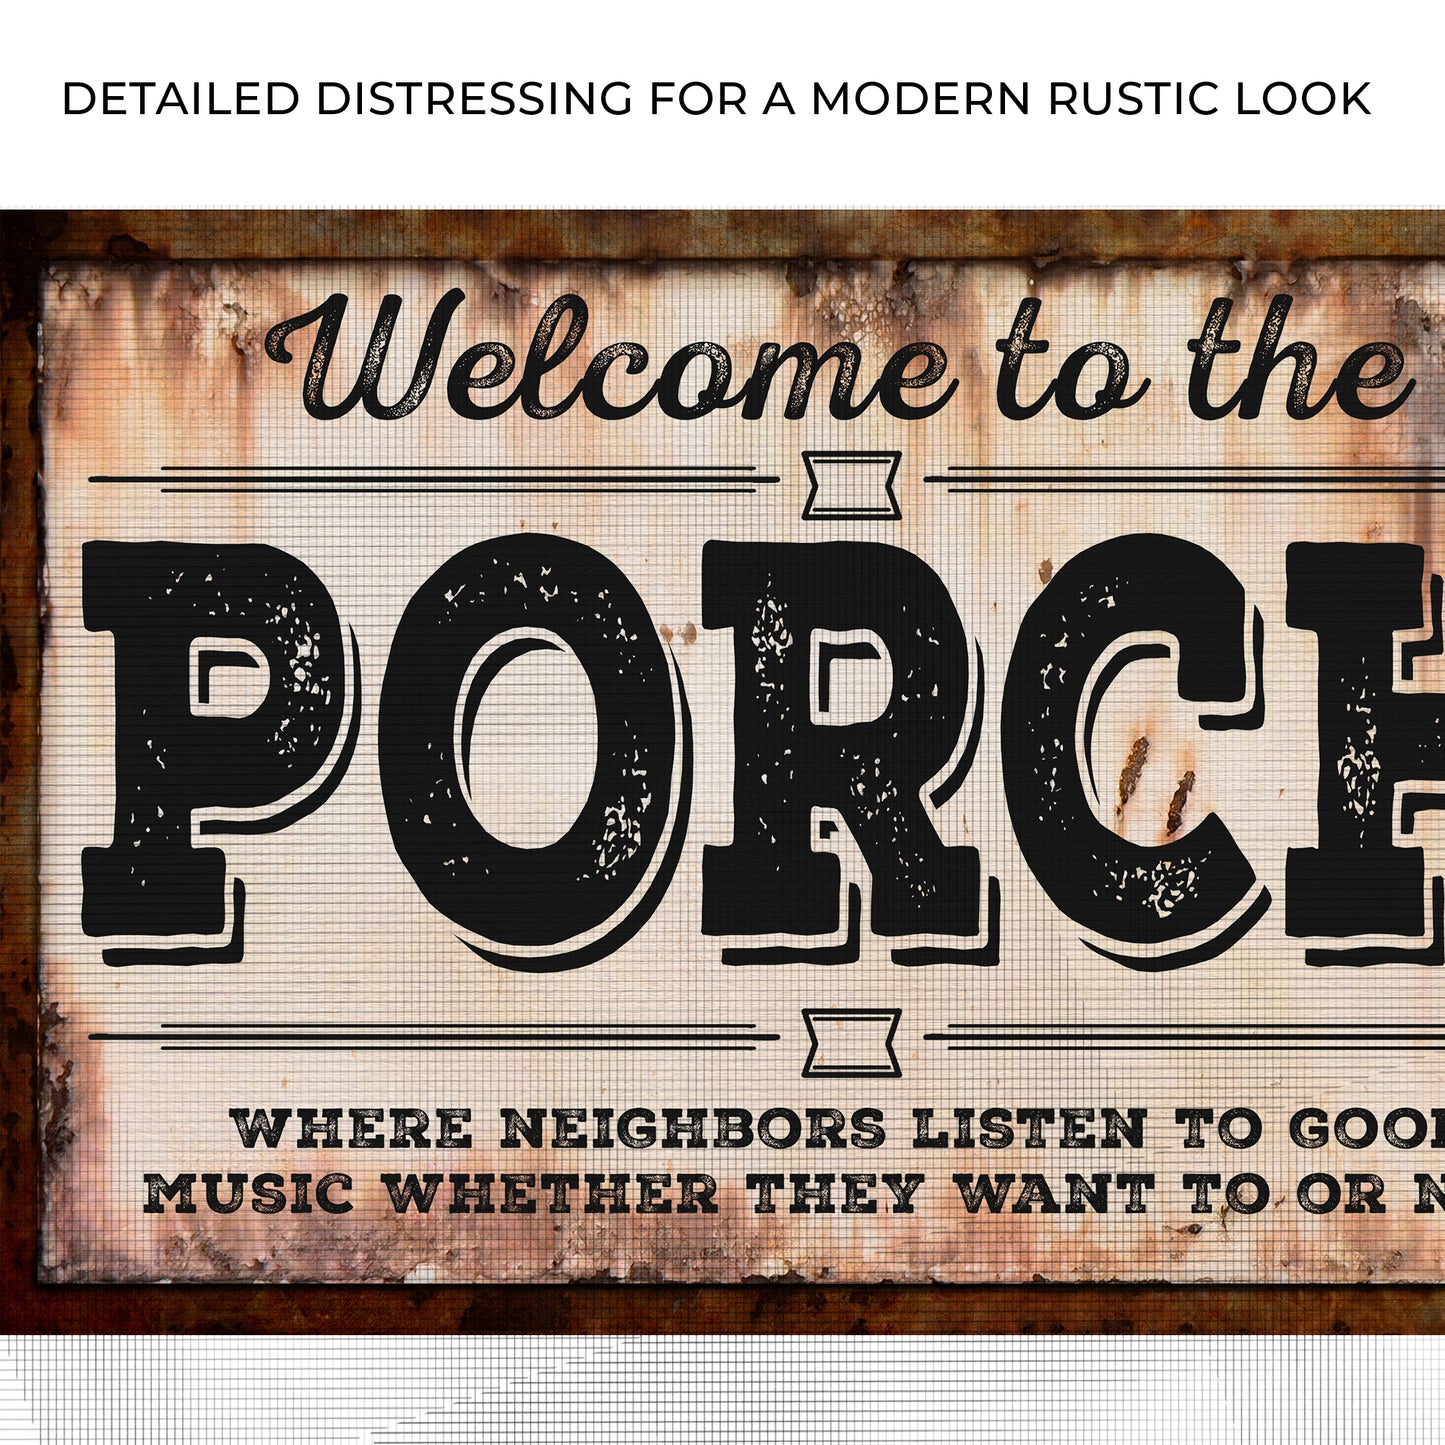 Neighbors Listen To Good Music Porch Sign